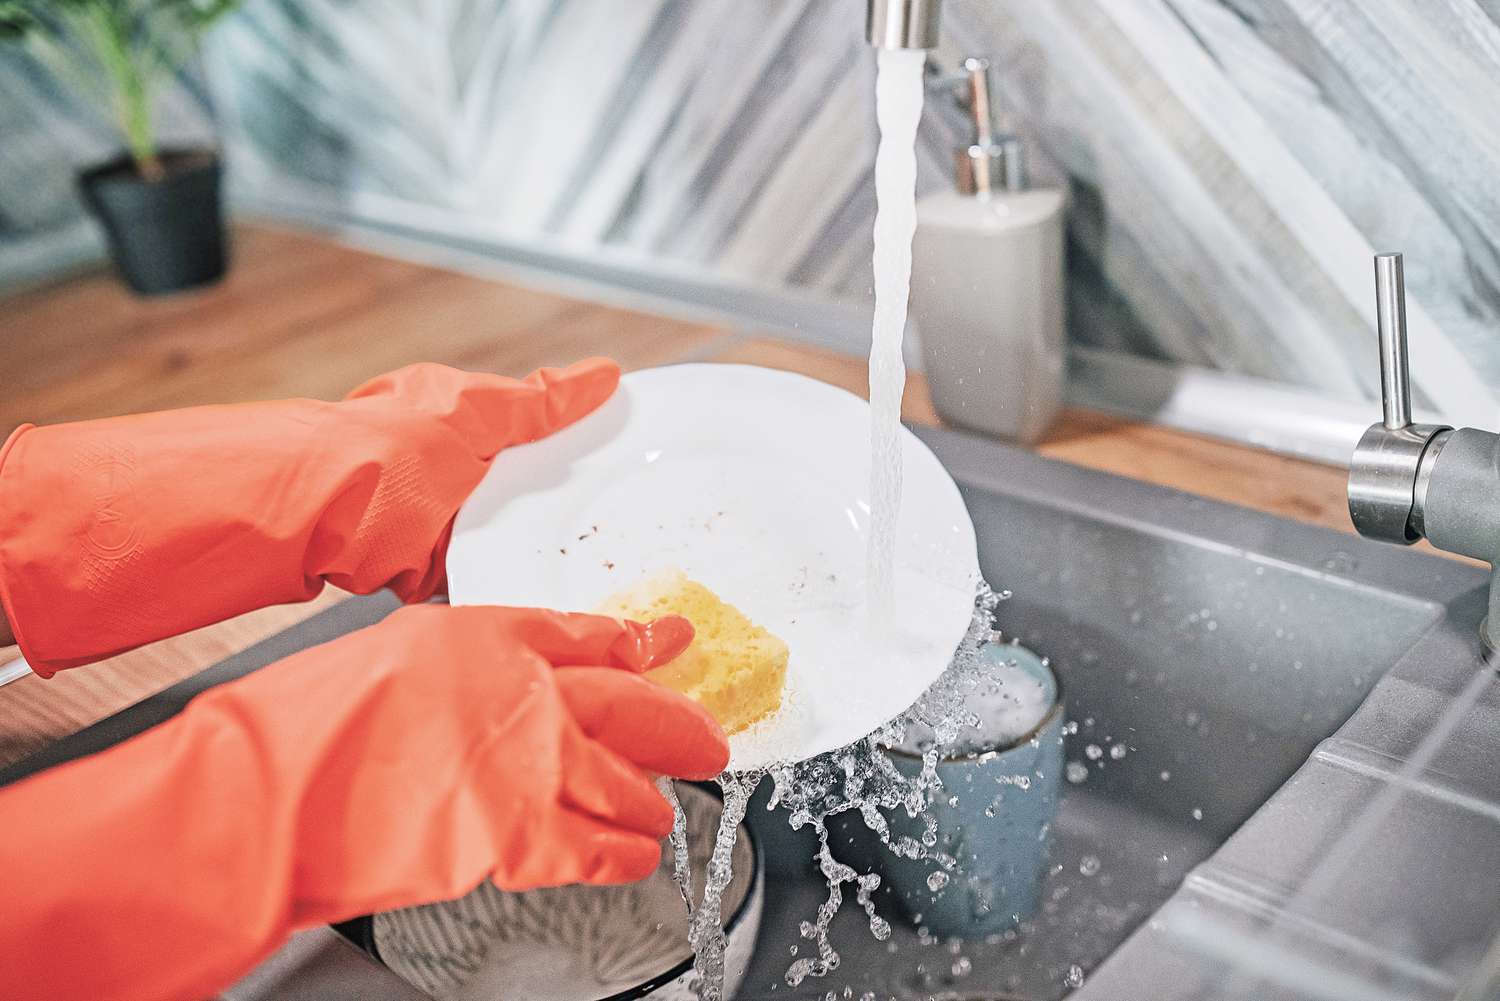 Louça suja sendo lavada por luvas laranja na pia da cozinha